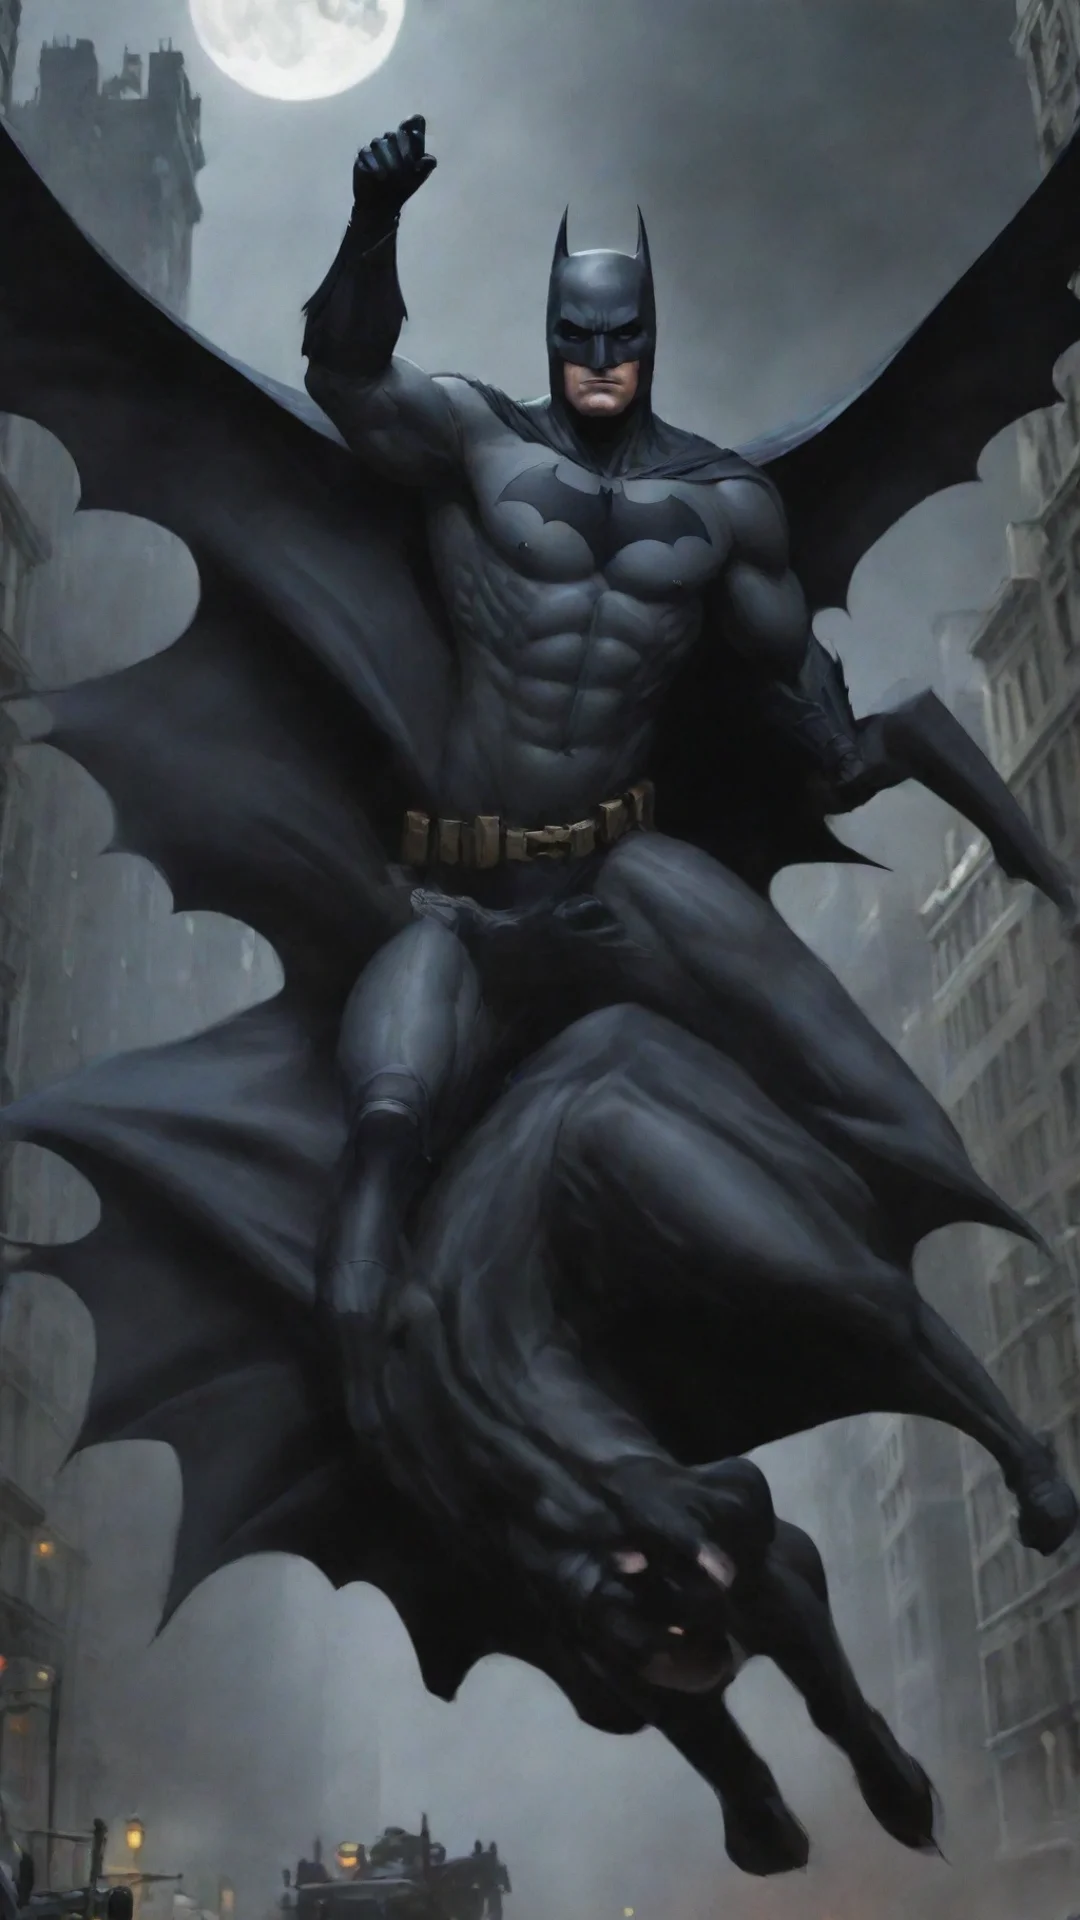 aiamazing batman riding black n160  awesome portrait 2 tall